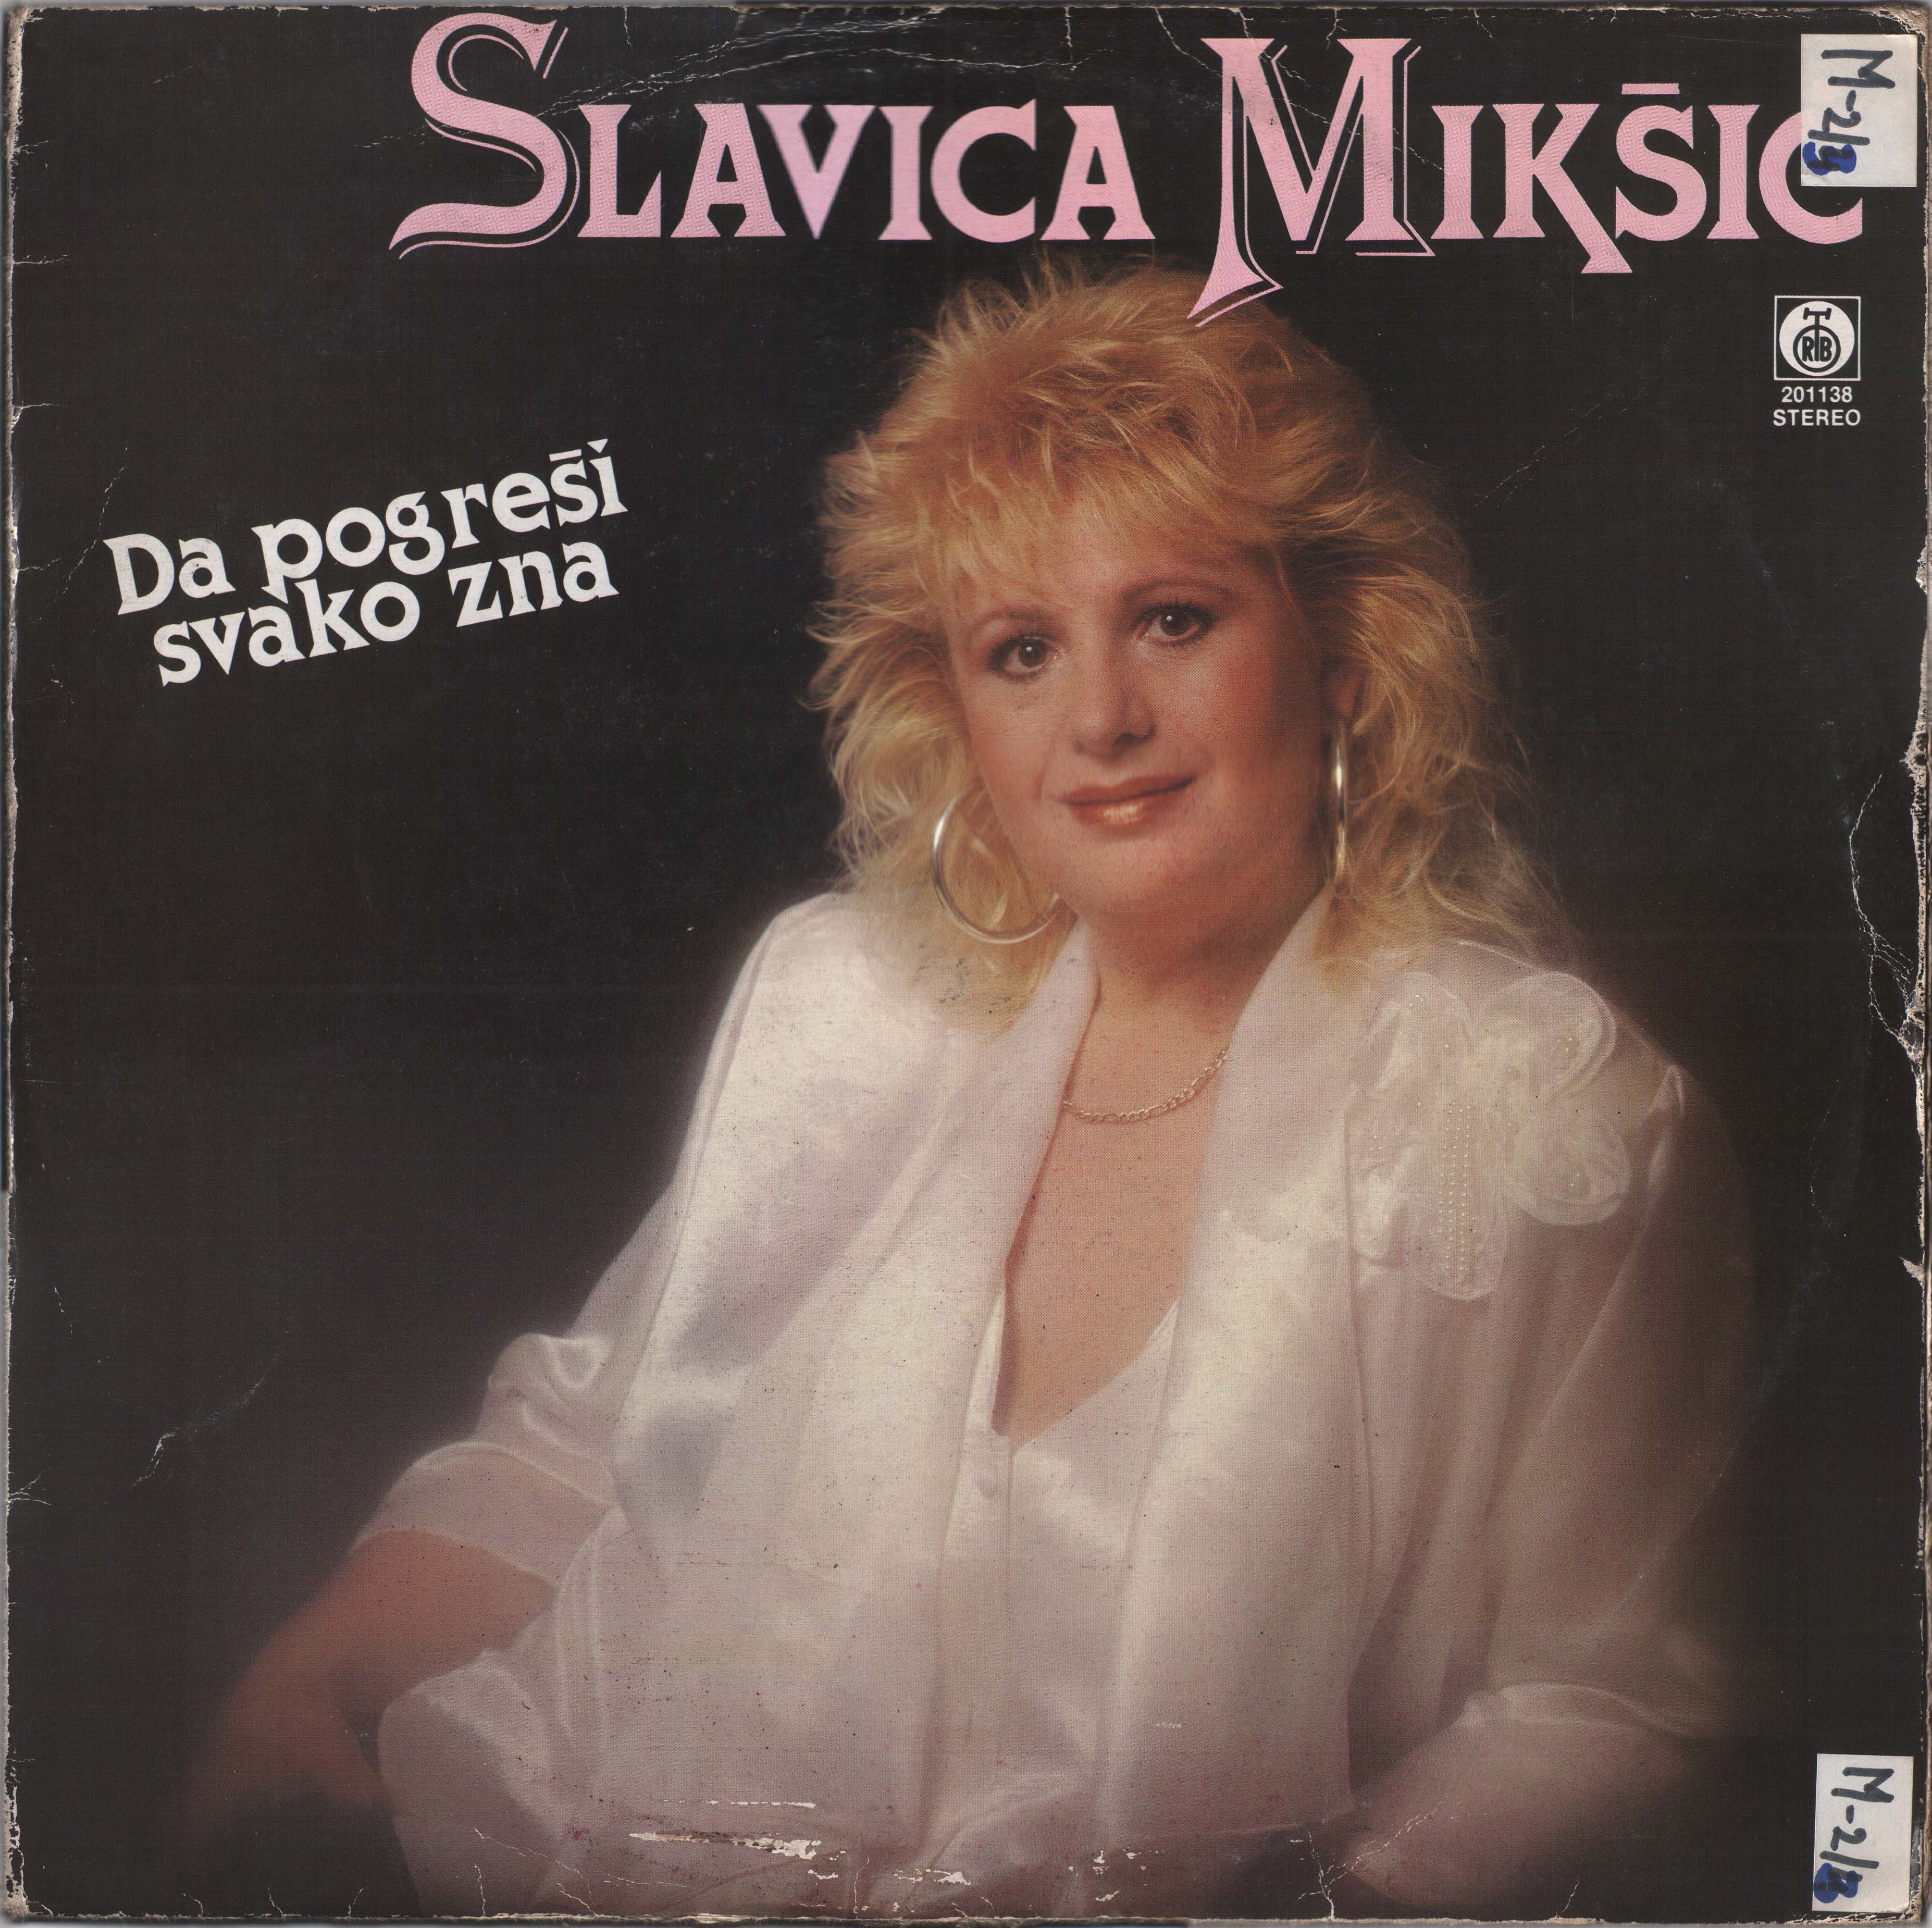 Slavica Miksic 1989 P